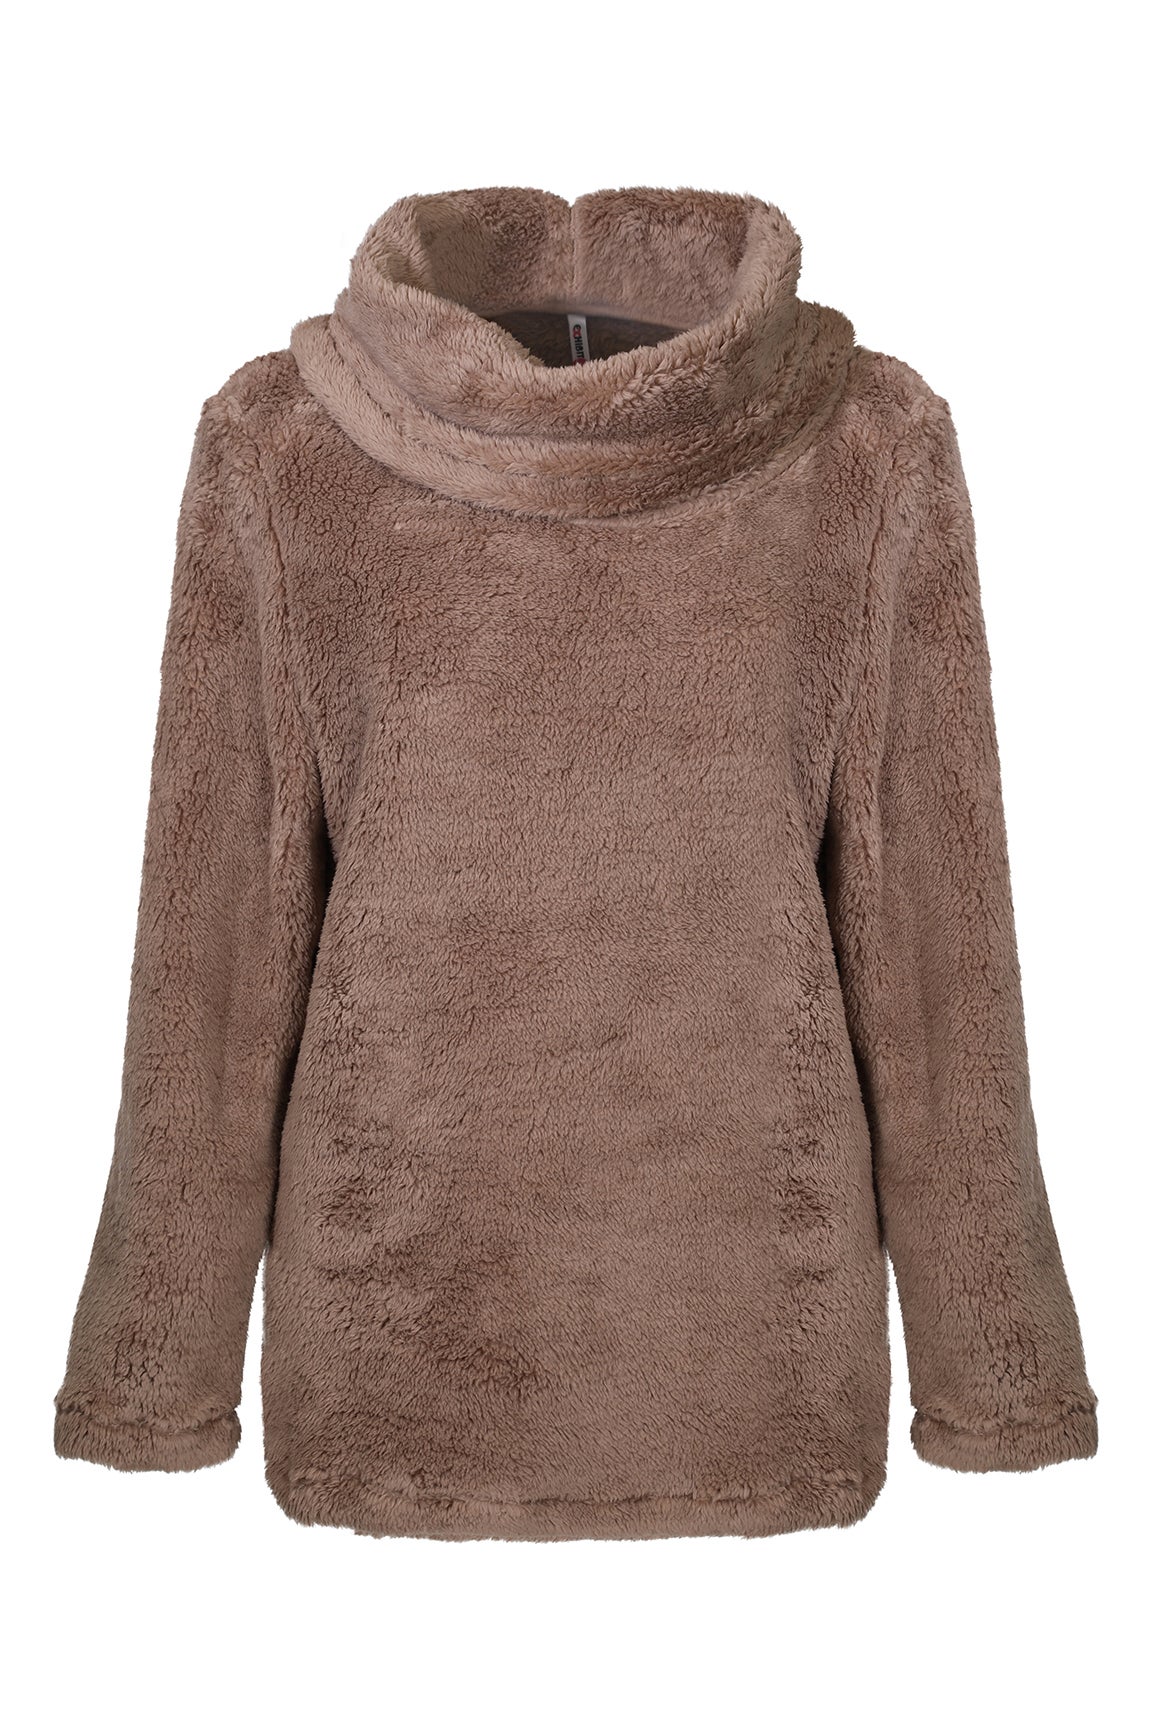 Soft Fleece Tunic in Bronze